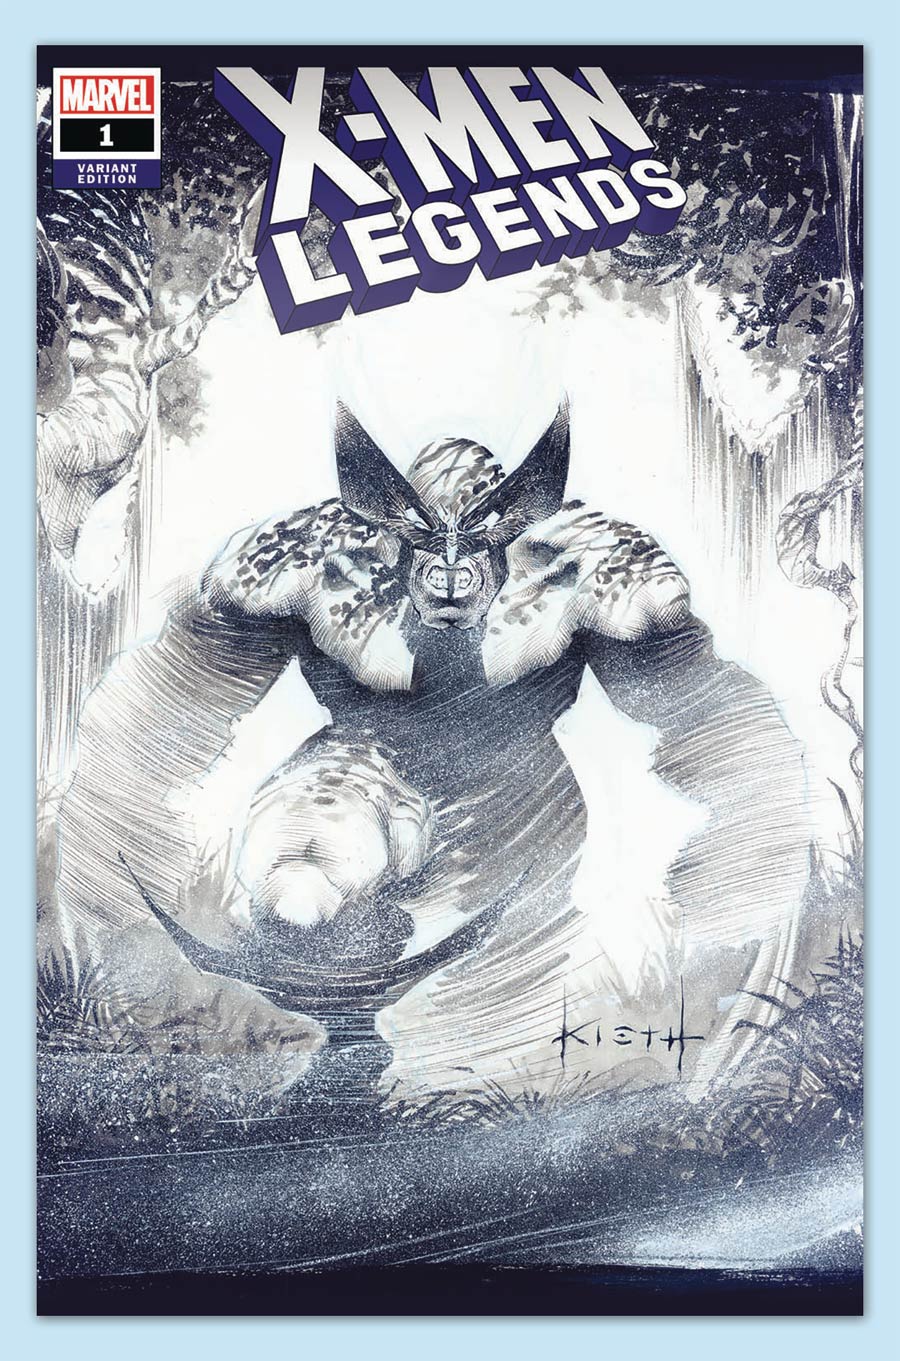 X-Men Legends #1 Cover G Clover Press Exclusive Sam Kieth Variant Cover